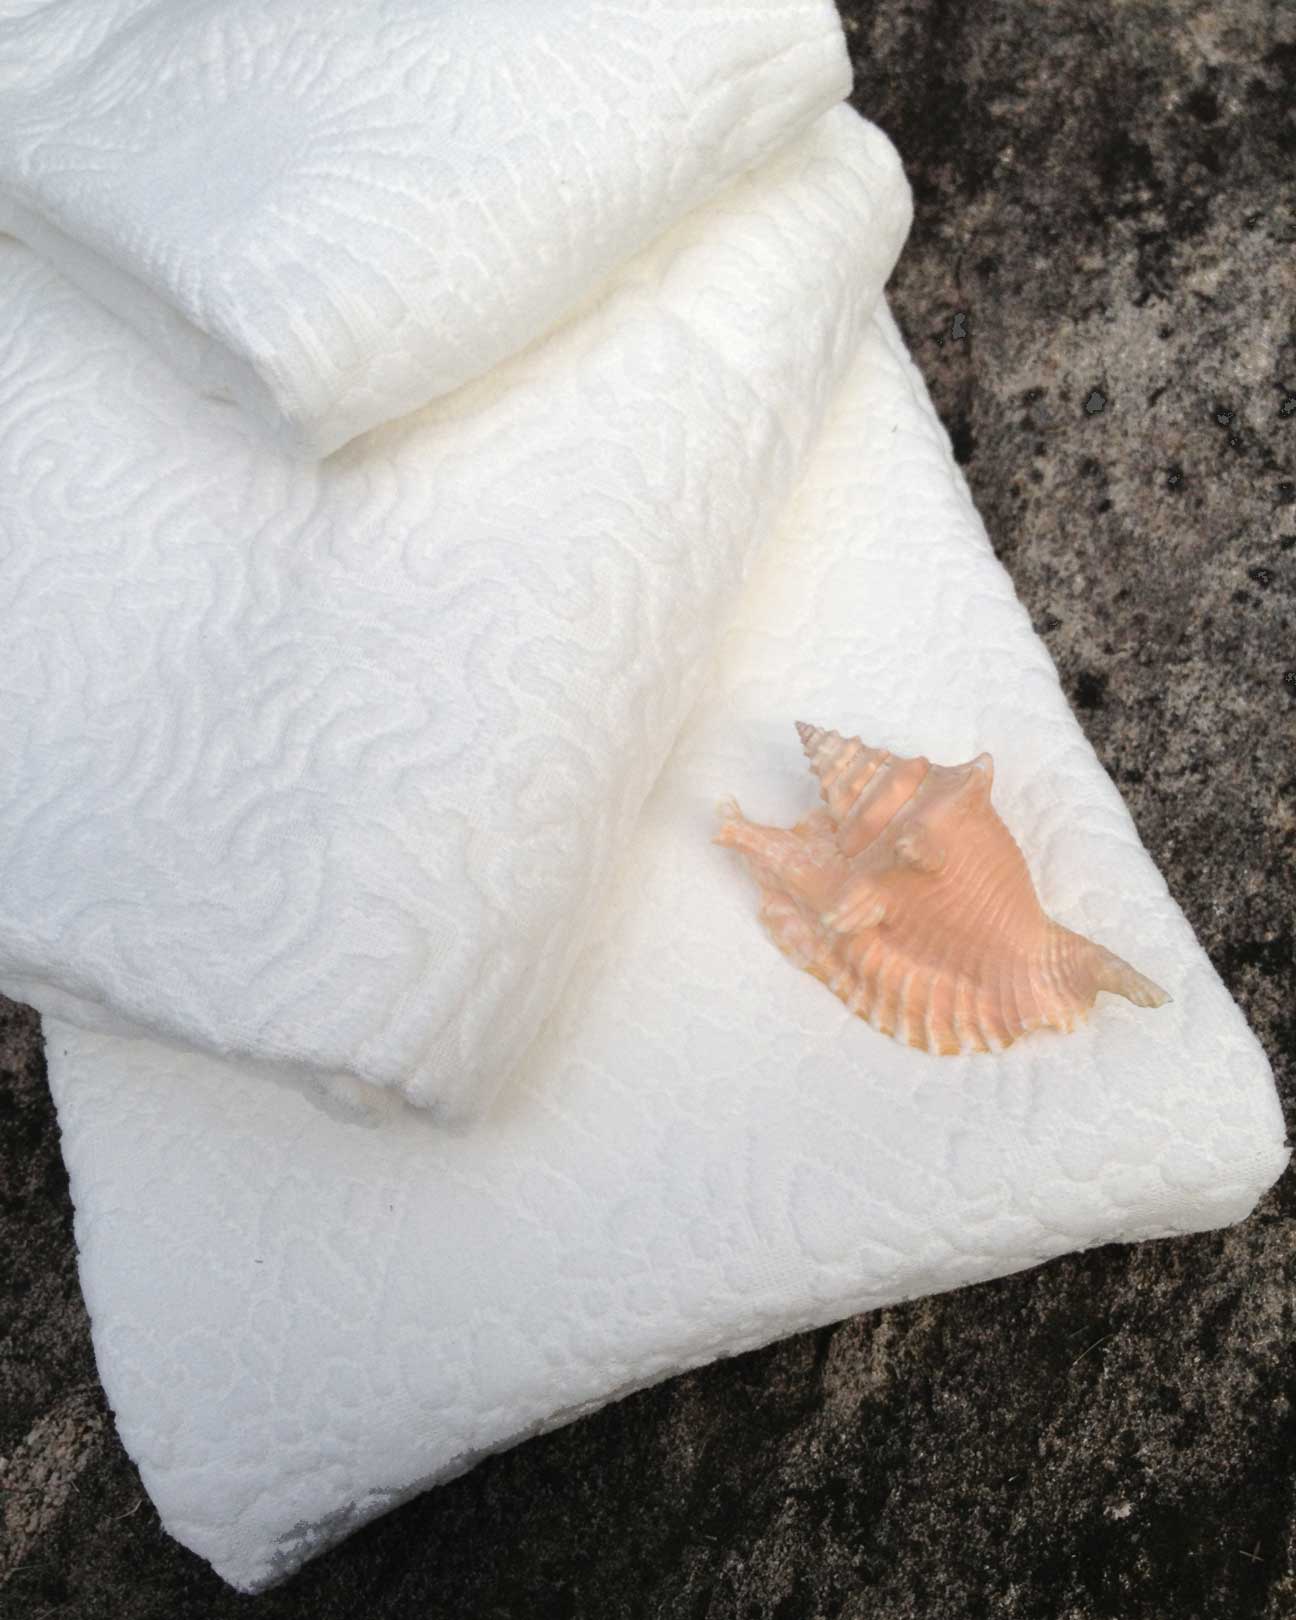 Hexo 3-Pc Organic Towel Set White